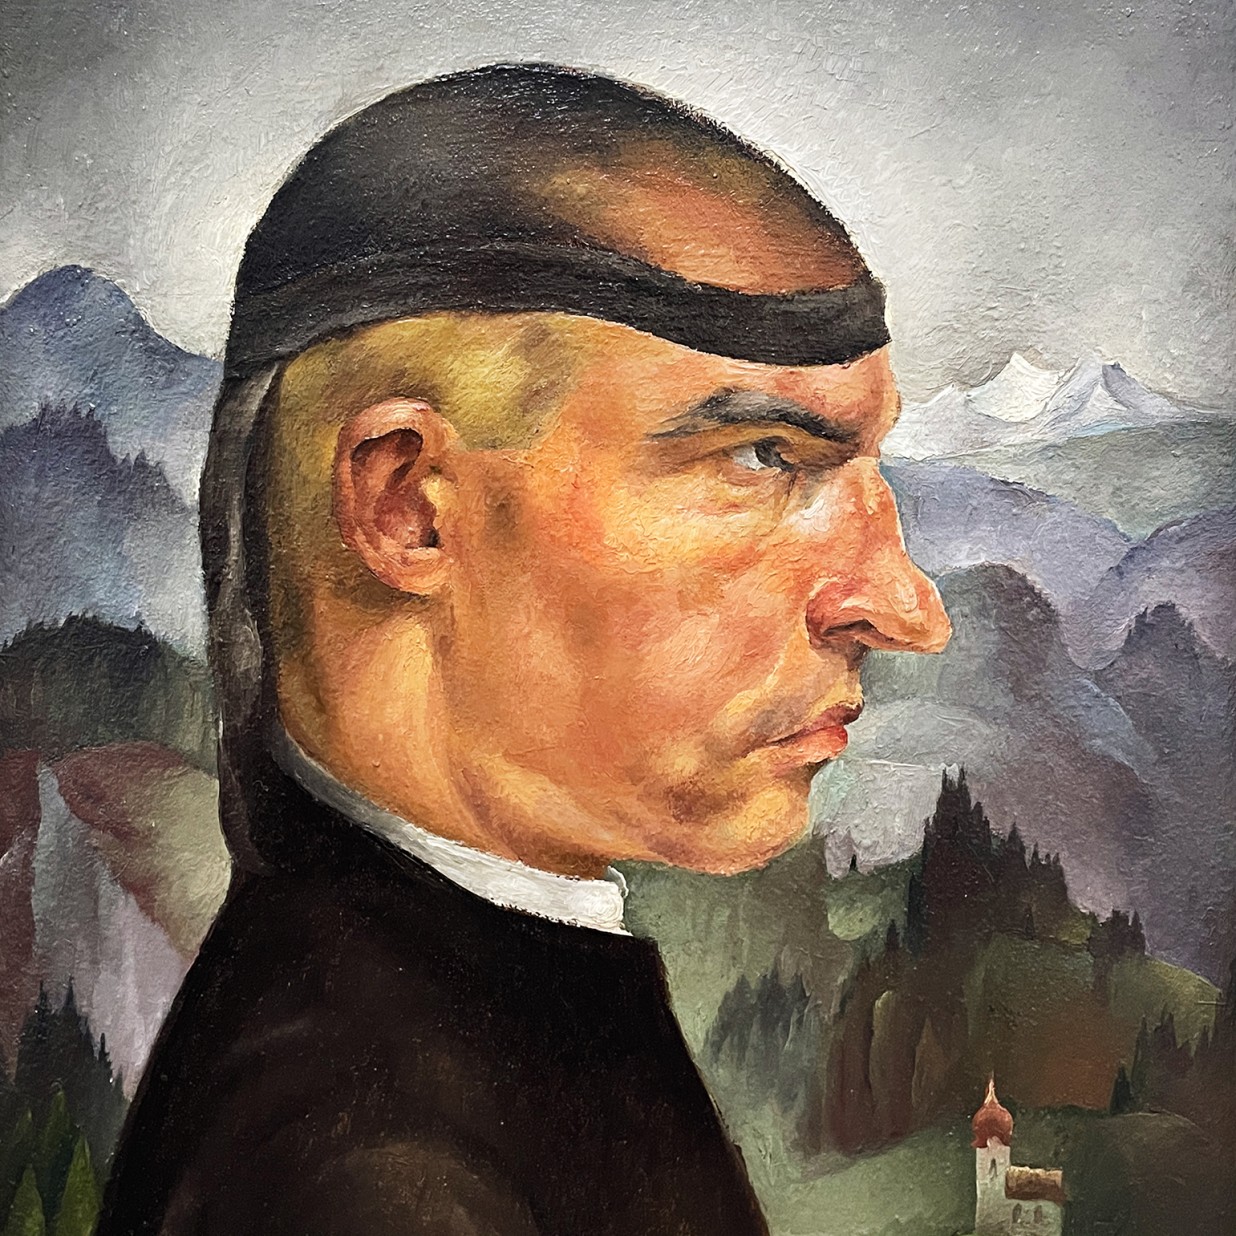 Альберд Биркле — Автопортрет с налобной повязкой, 1923 (холст, масло)